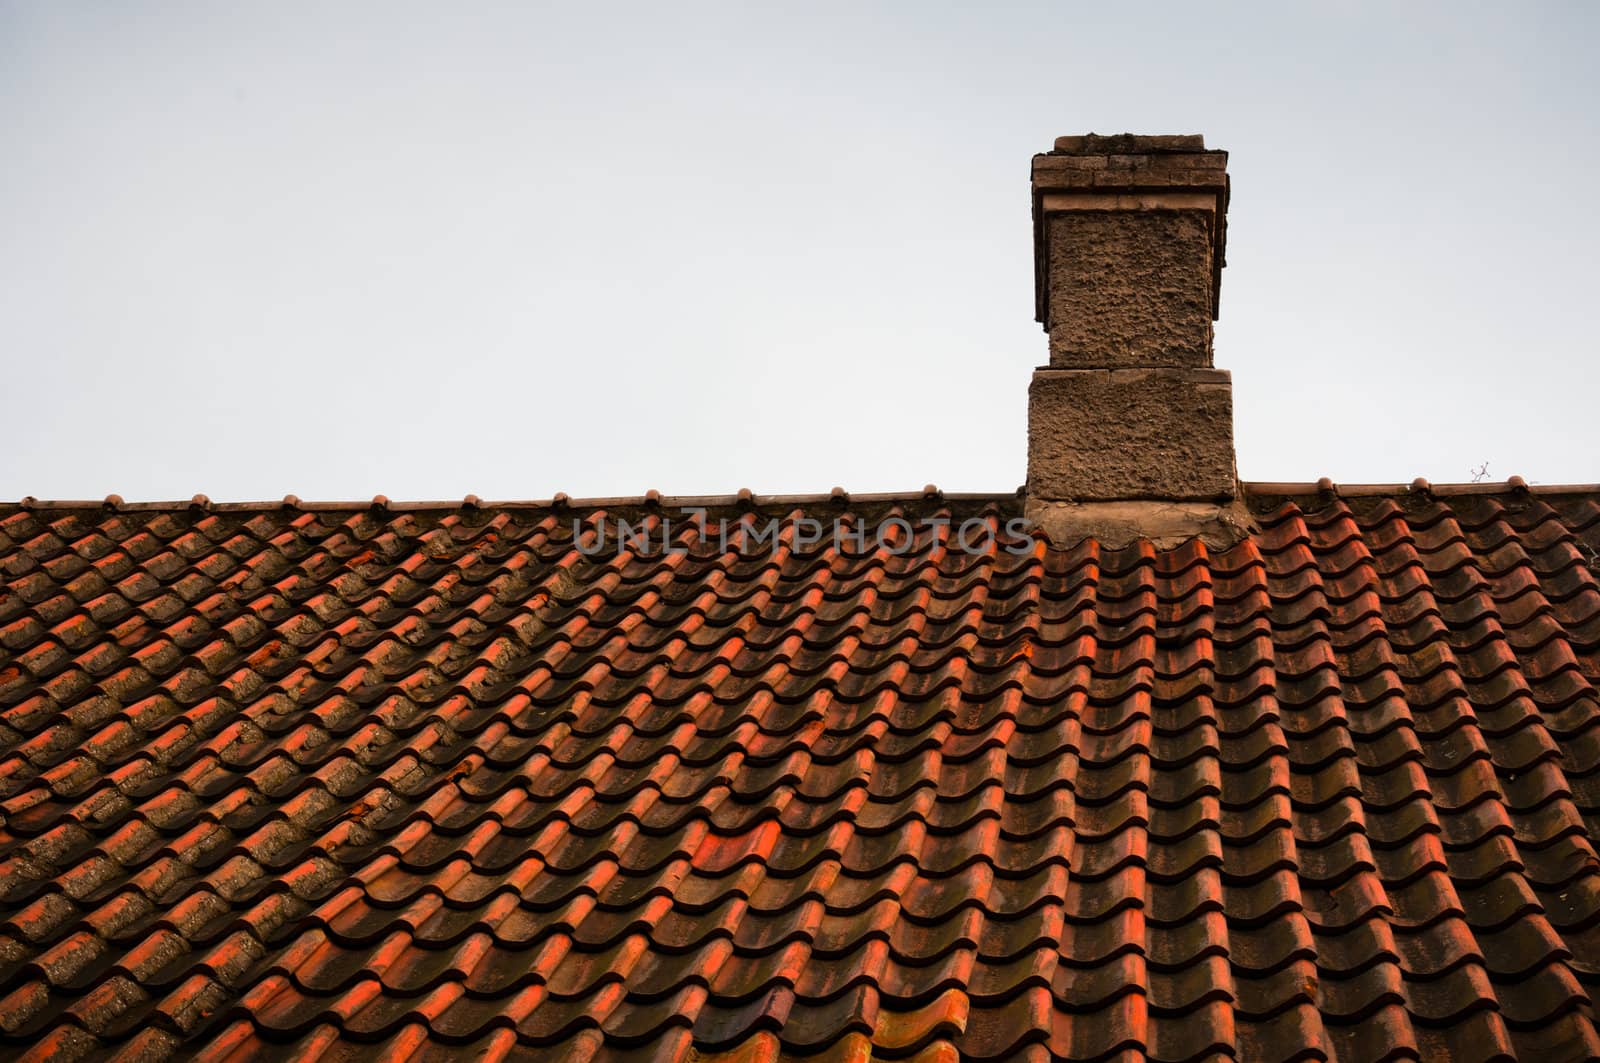 Scandinavian roof tiles texture with chimney in Tallinn, Estonia